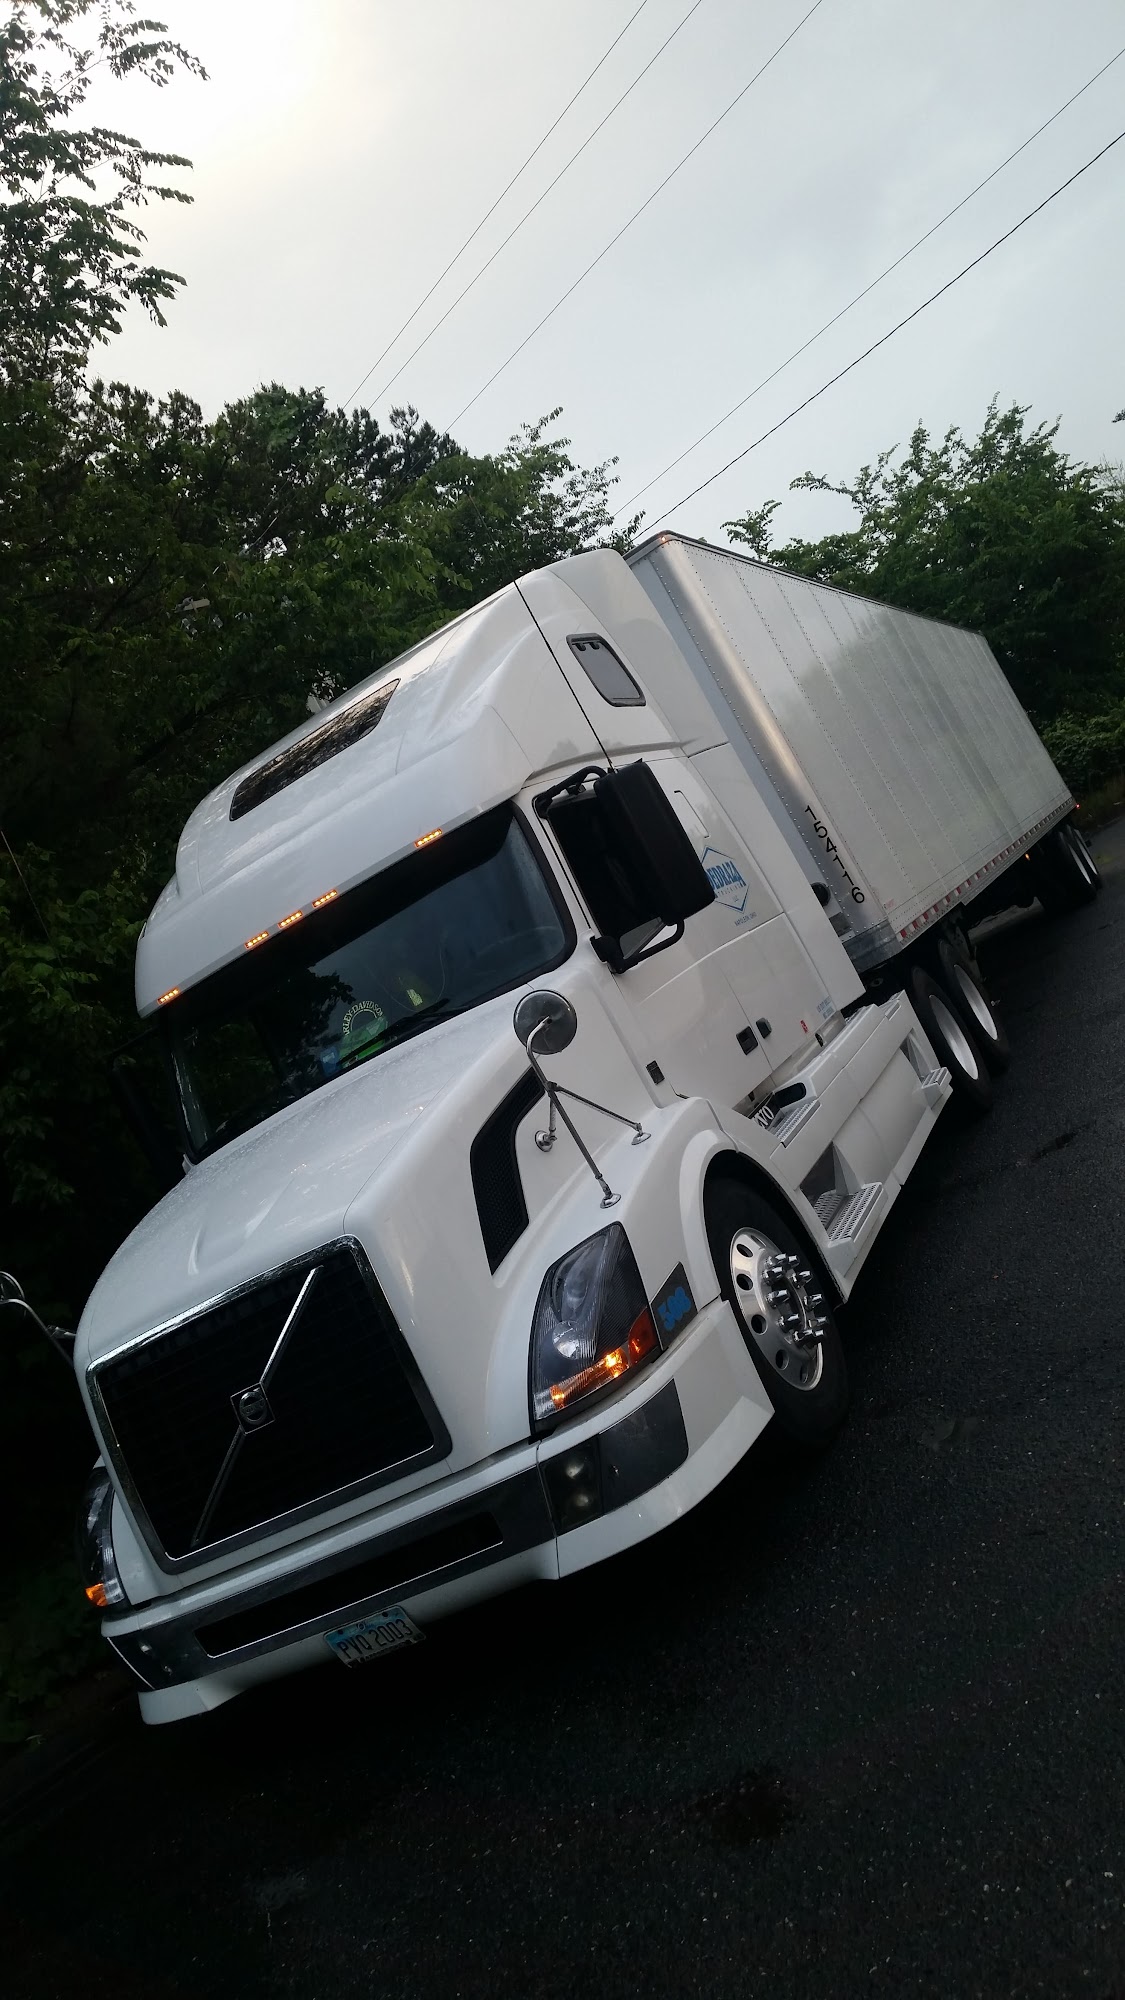 Pedraza Trucking 599 Freedom Dr, Napoleon Ohio 43545